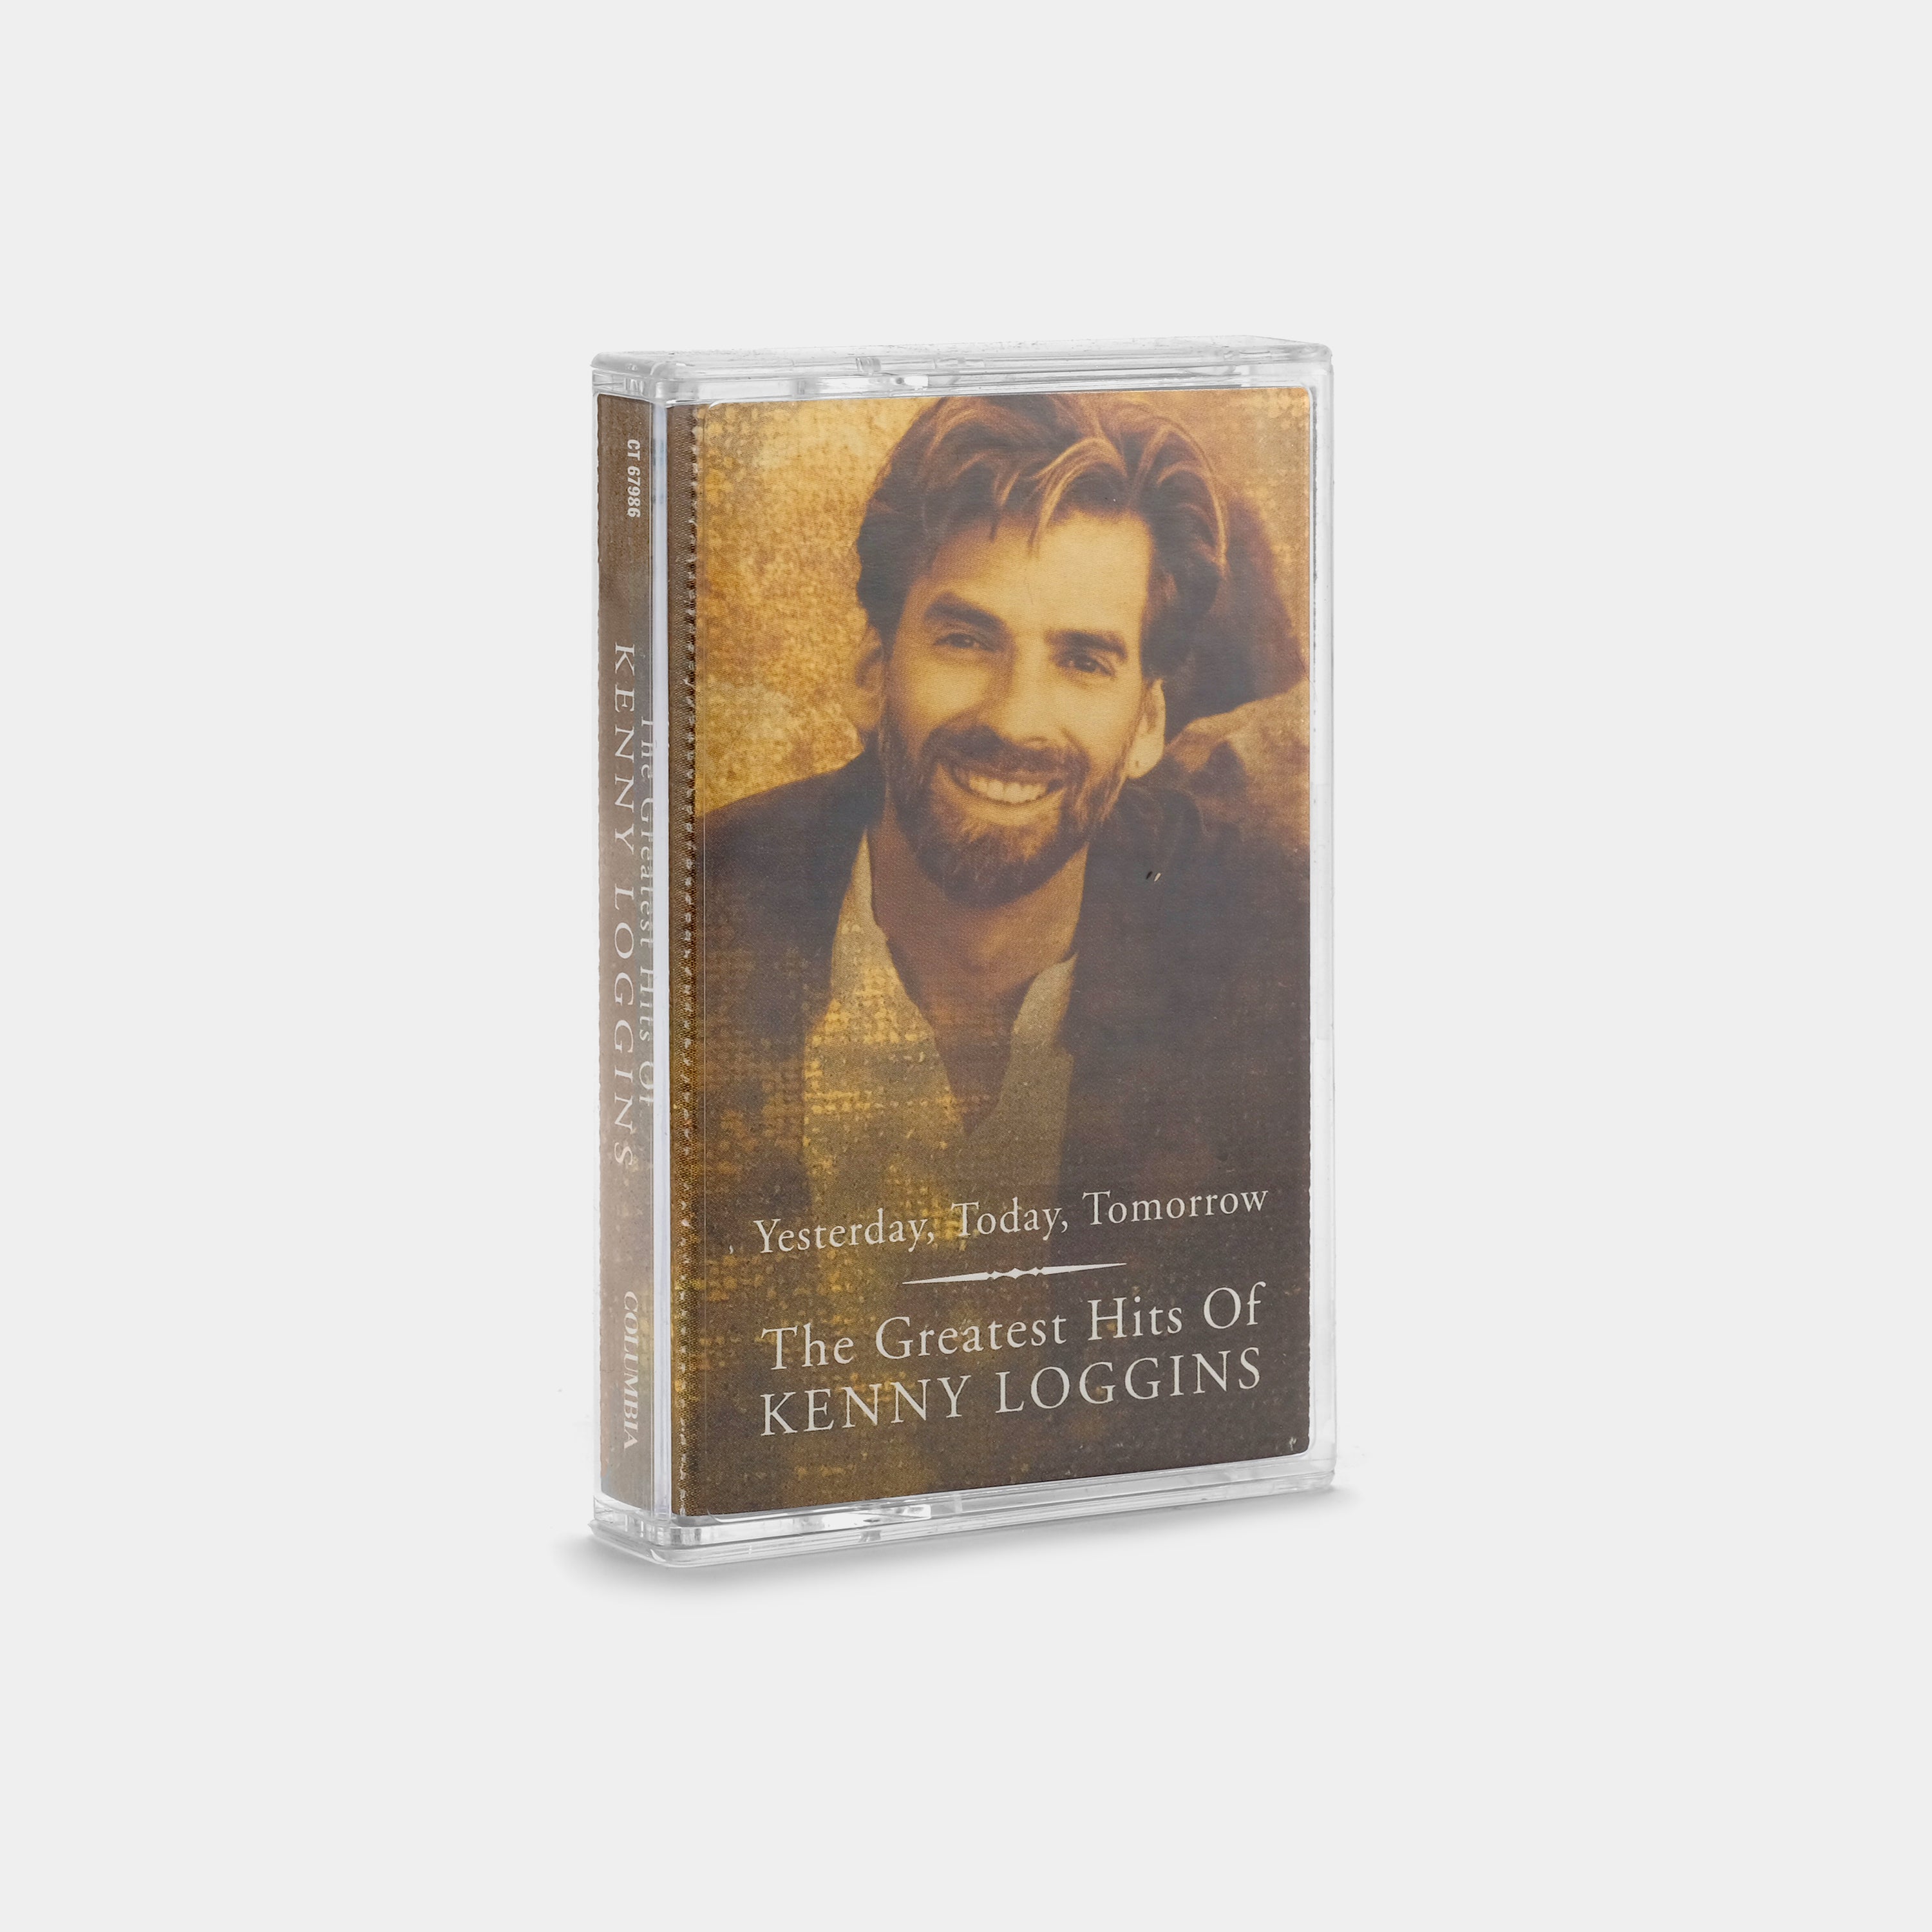 Kenny Loggins - The Greatest Hits of Kenny Loggins Cassette Tape